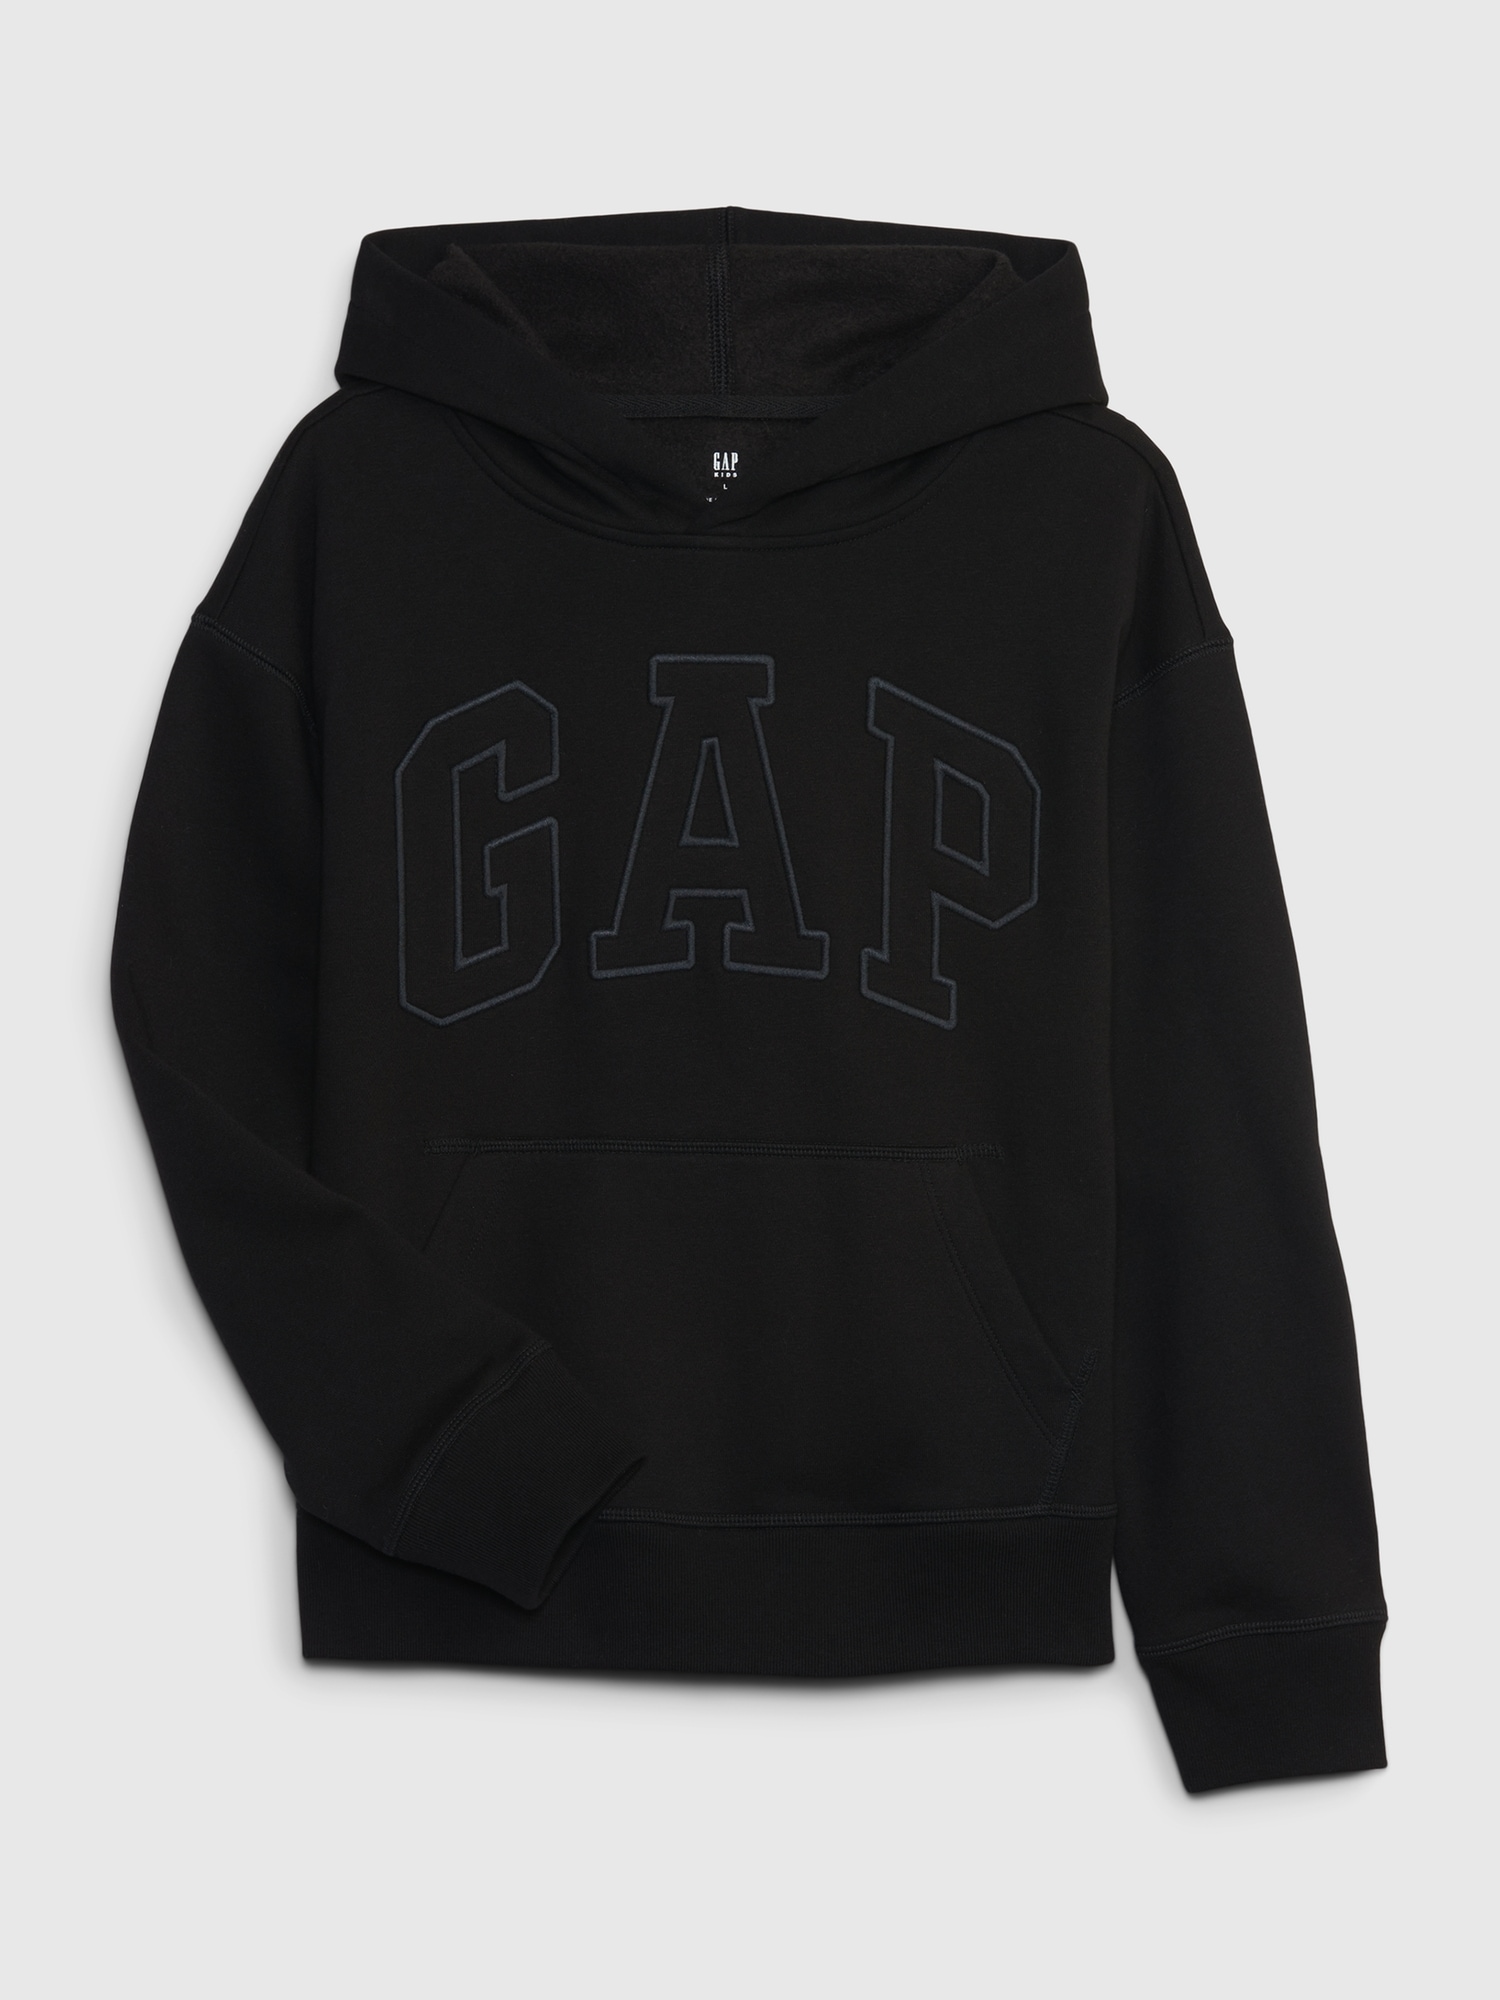 Kids Gap Arch Logo Hoodie | Gap